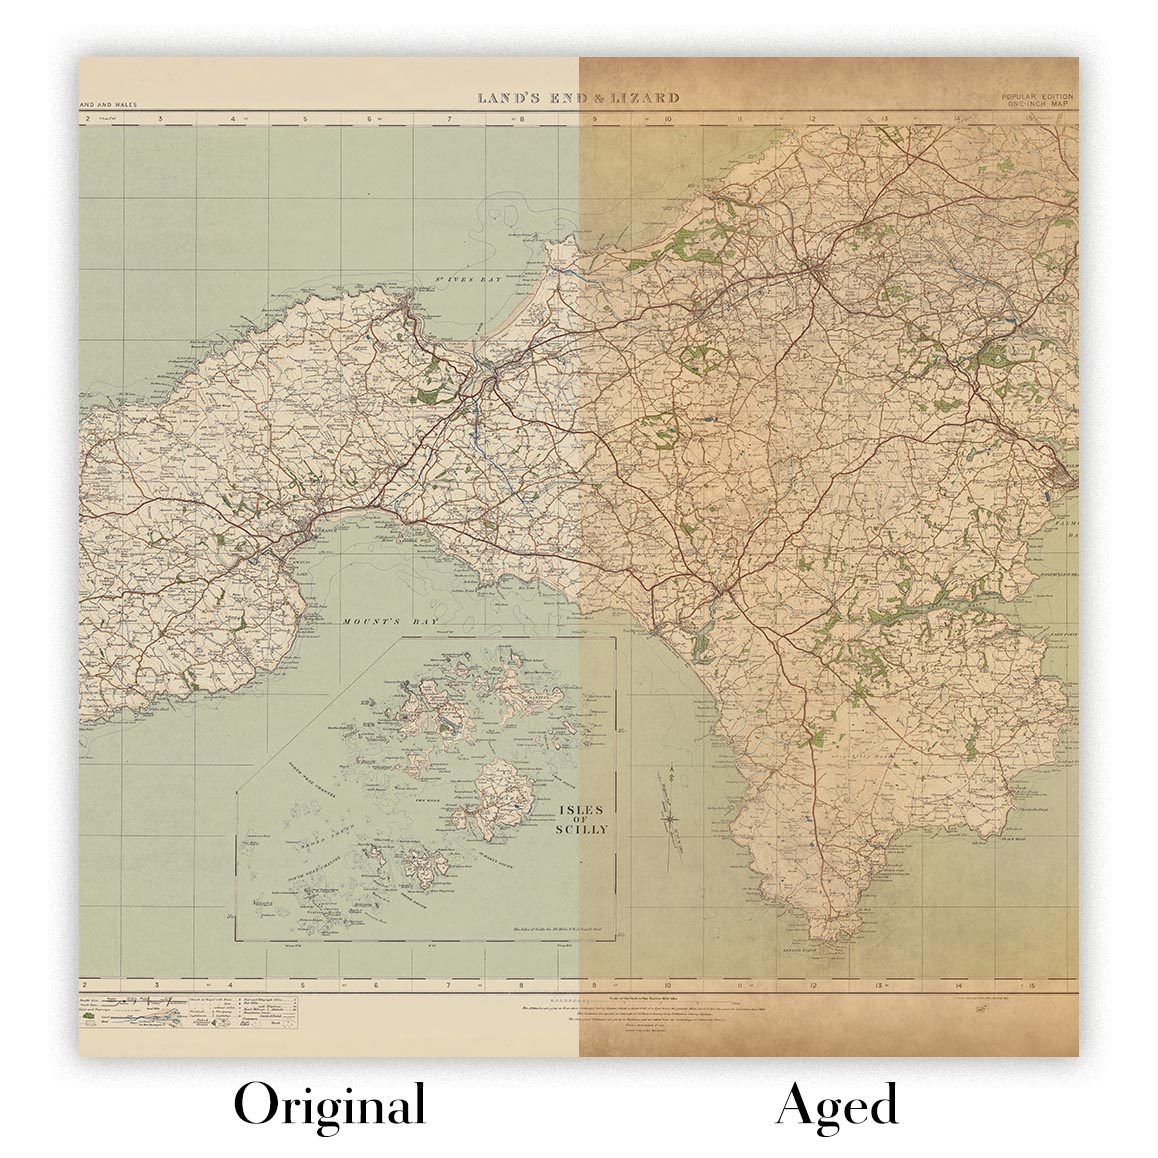 Mapa antiguo de Ordnance Survey - Hoja 146 Lands End & Lizard, 1919-1926: Truro, Falmouth, St Ives, Penzance, Helston, St Michael's Mount, Lizard Point